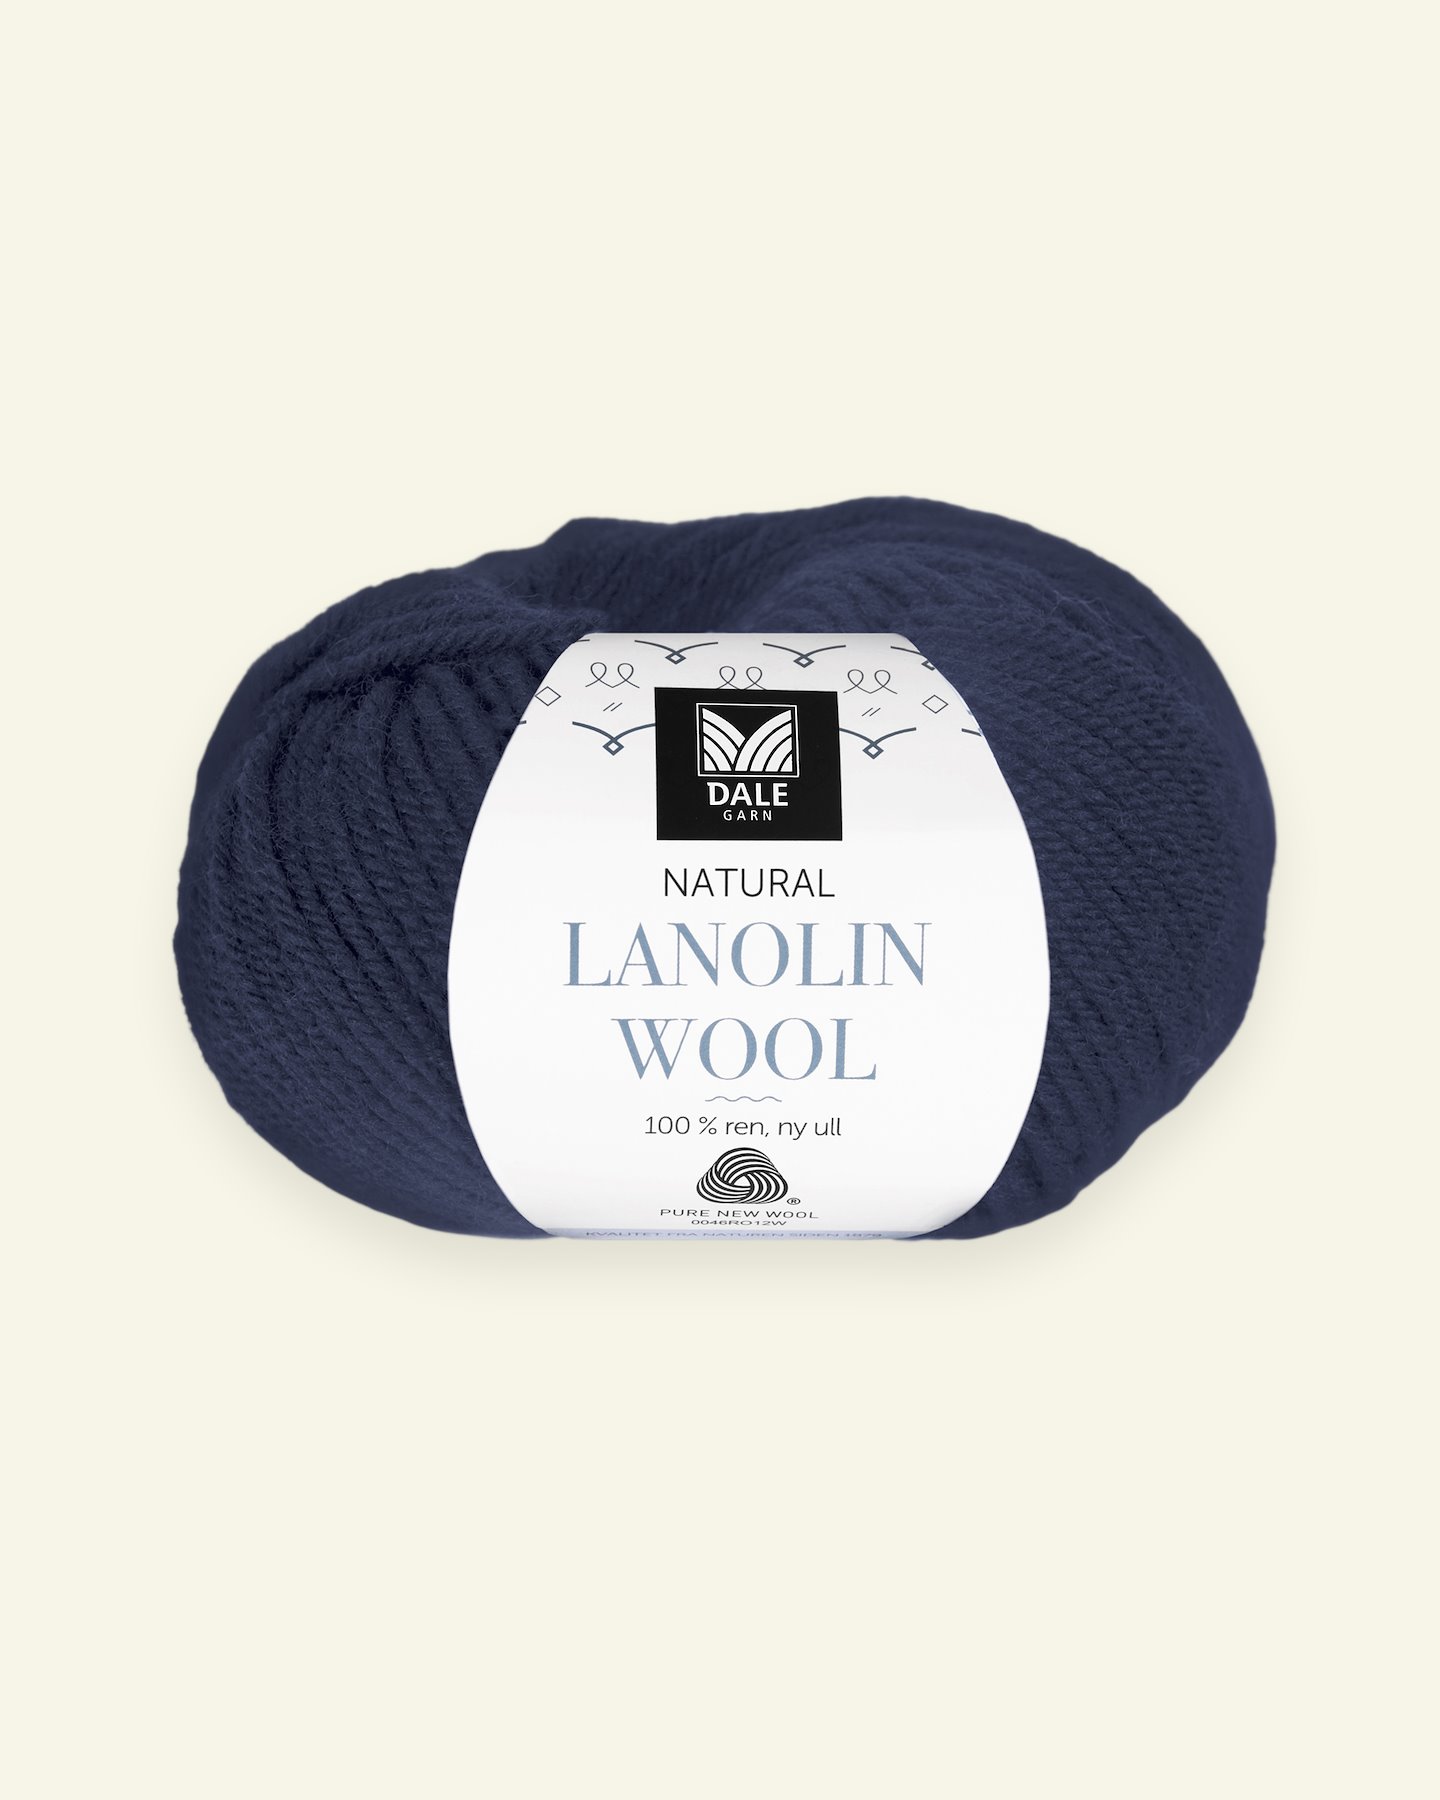 Dale Garn, 100% Biowolle "Lanolin Wool", dunkel marine (1437) 90000292_pack